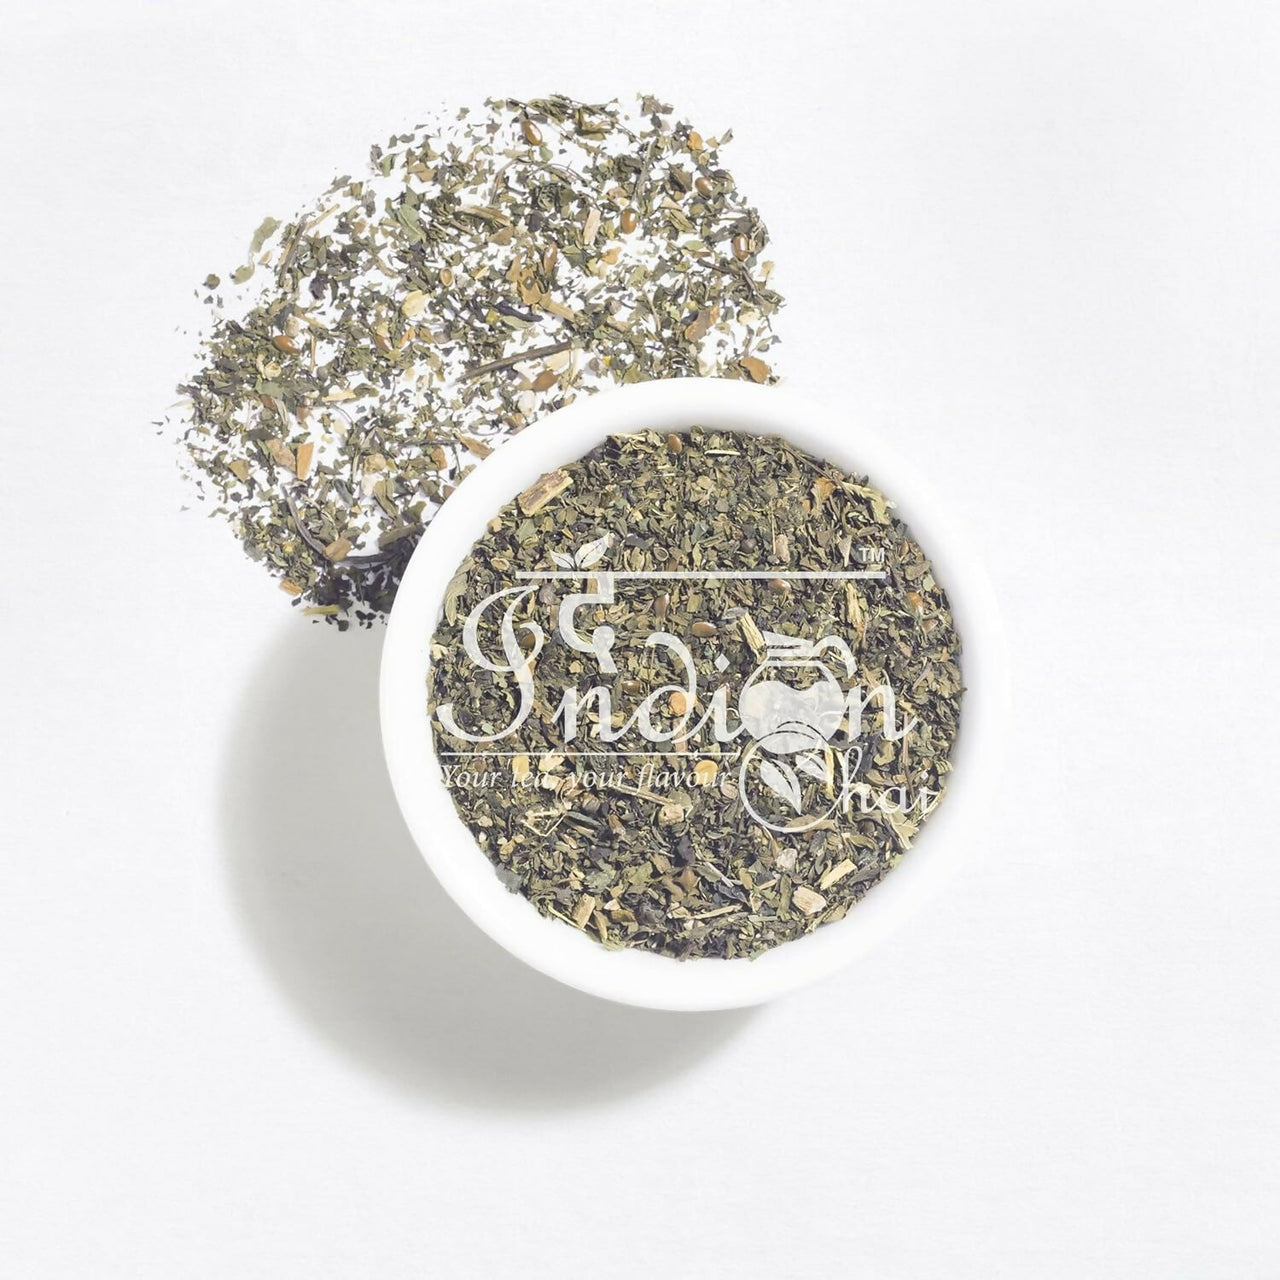 The Indian Chai - PCOS Relief Herbal Tea - Distacart